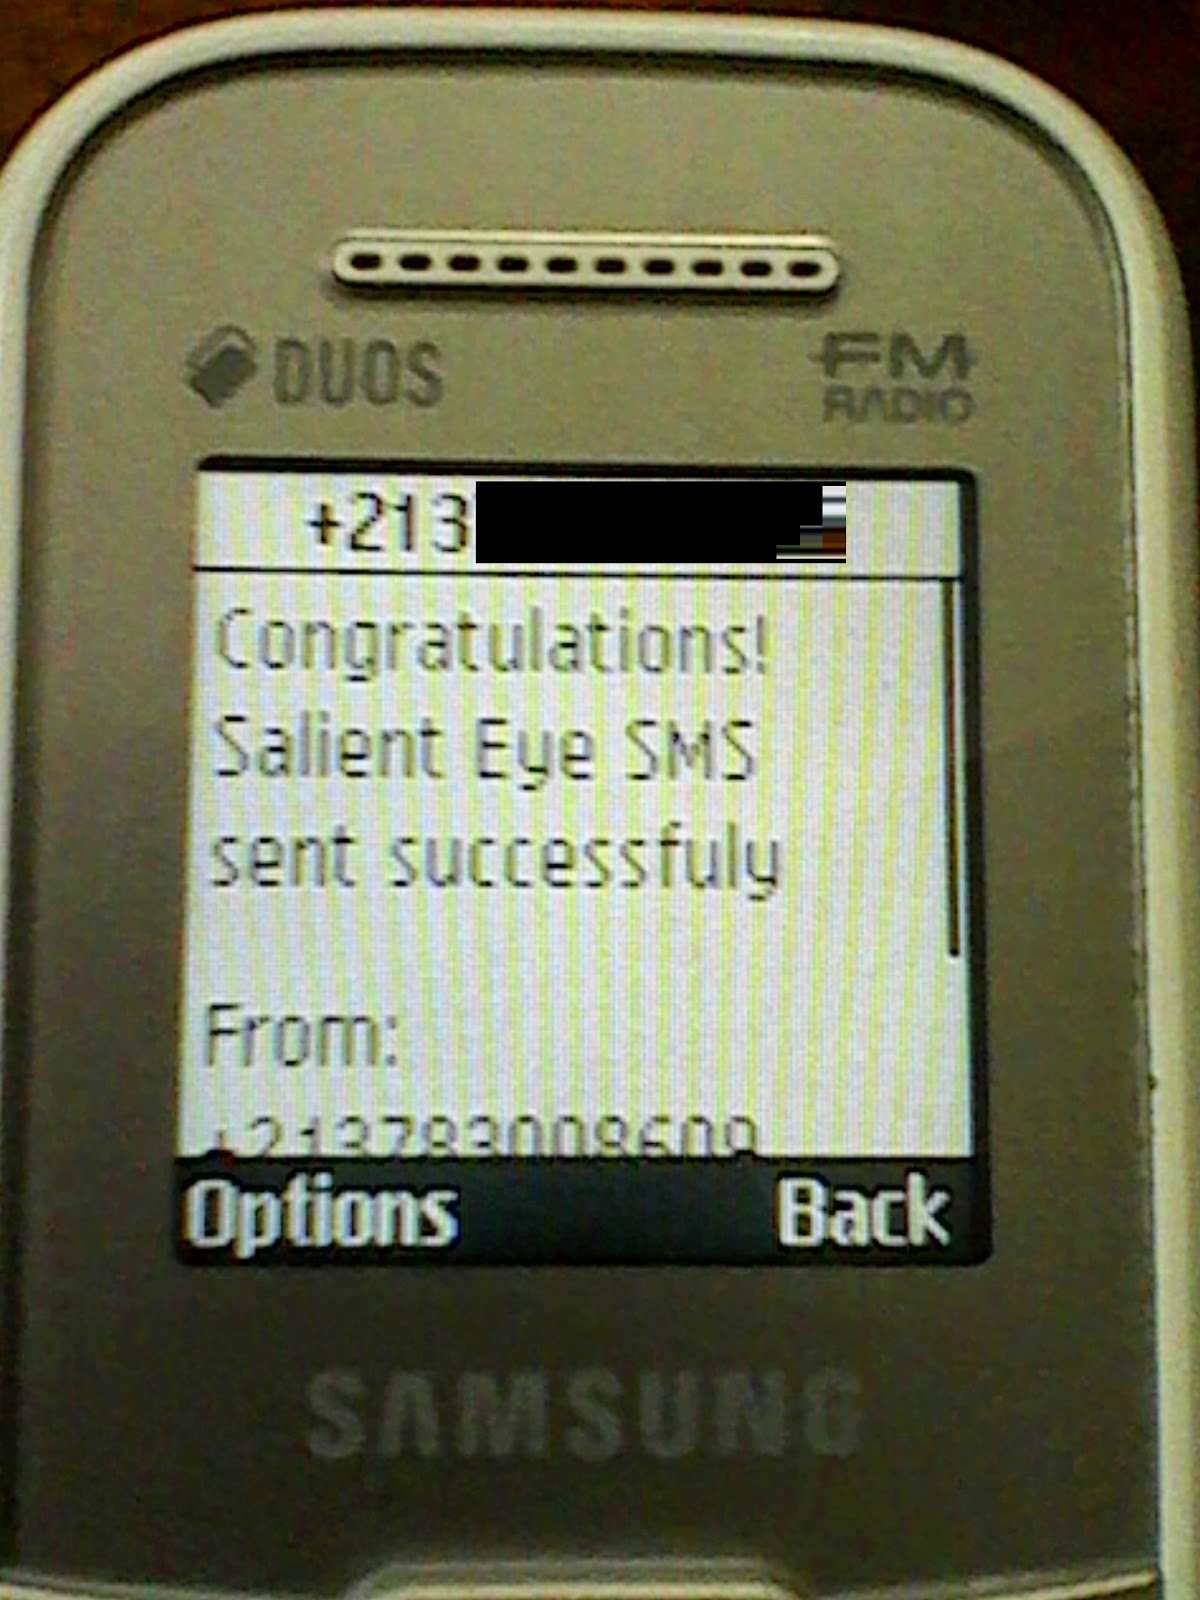 تطبيق "salient eye" يحول هاتفك لجهاز مراقبة salient-eye-Apply-the-salient-eye-Transforms-your-phone-to-your-monitor